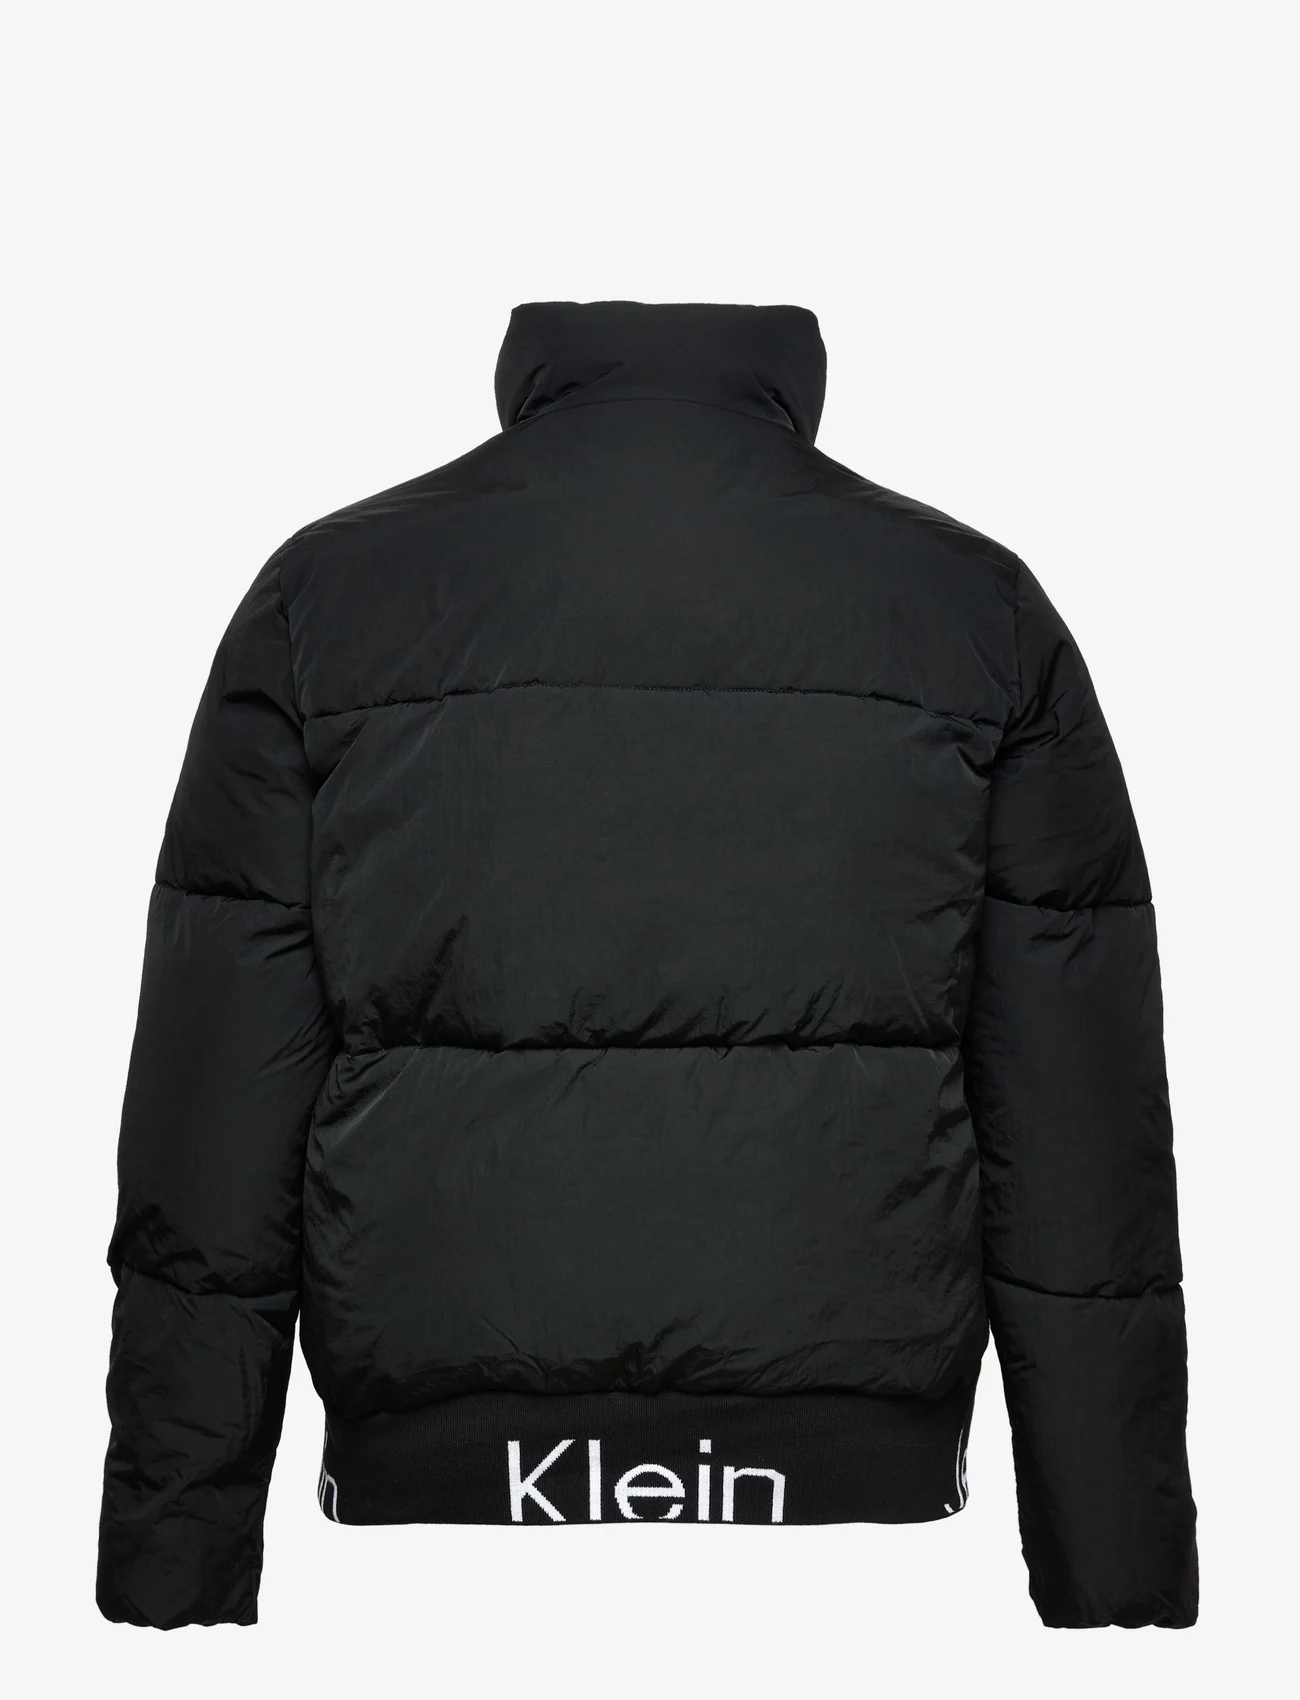 Calvin Klein Jeans - PLUS LOGO HEM SHORT PUFFER - gefütterte jacken - ck black - 1